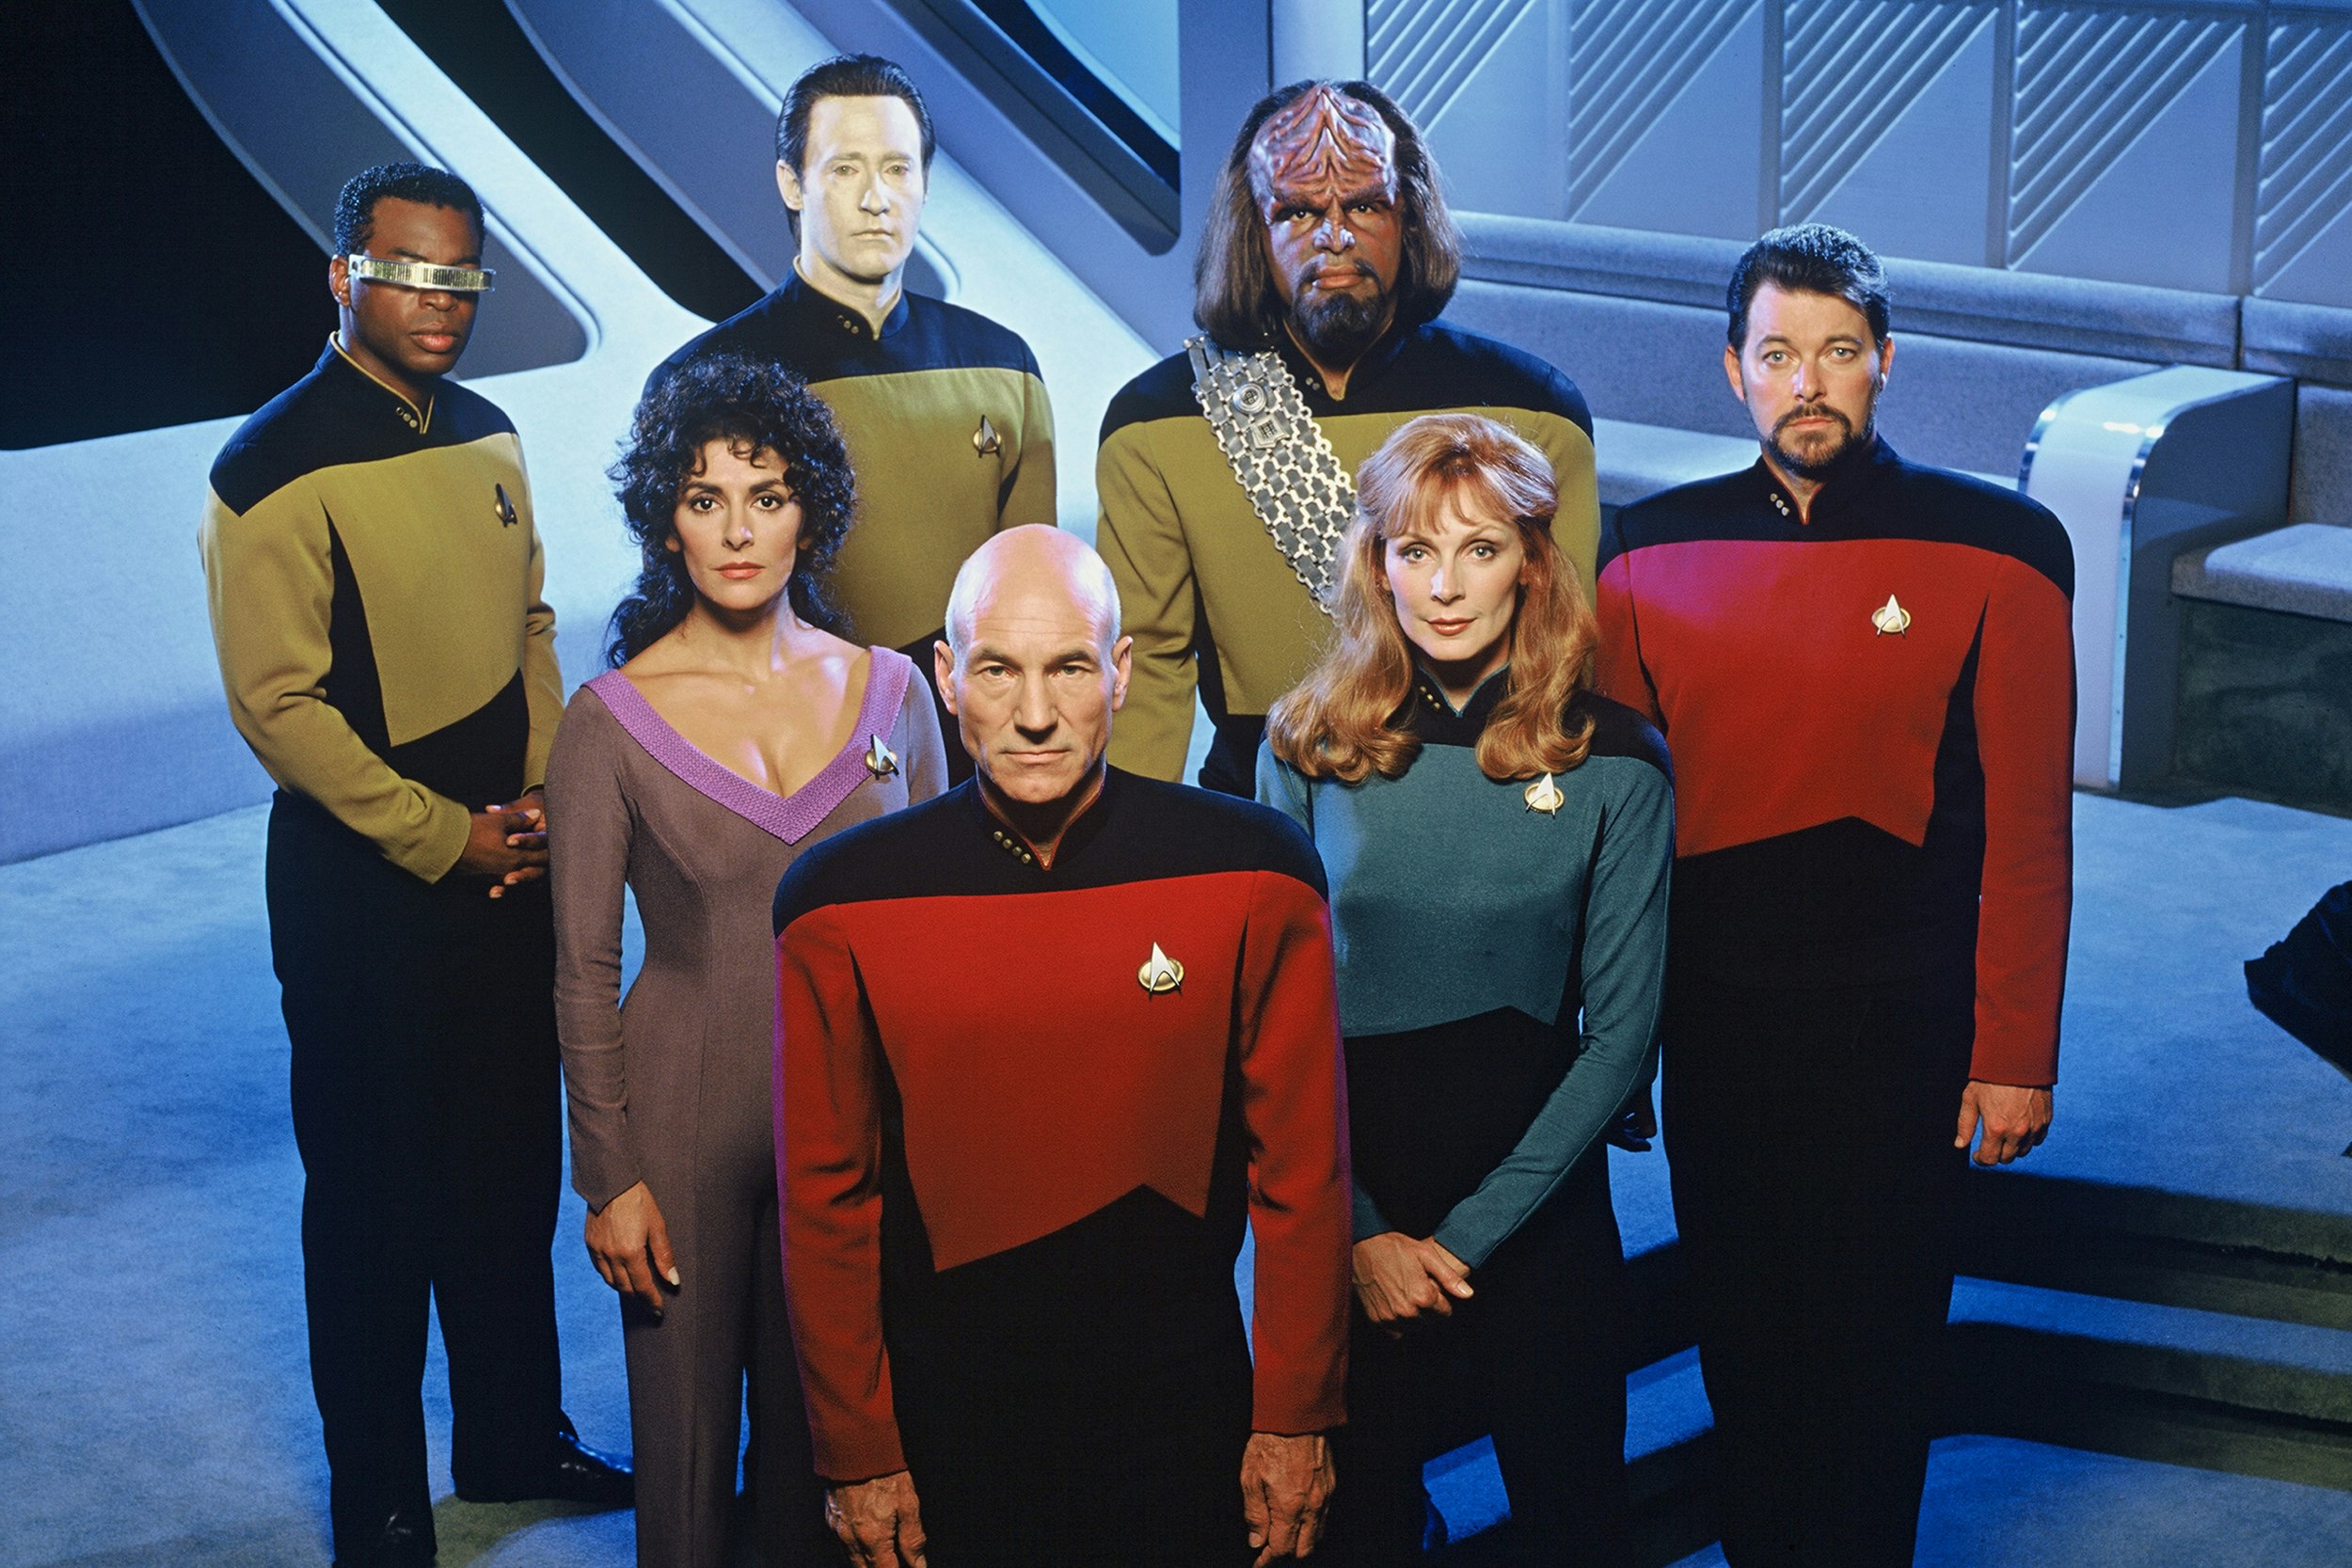 Franchise Play: The 'Star Trek' Universe Impact